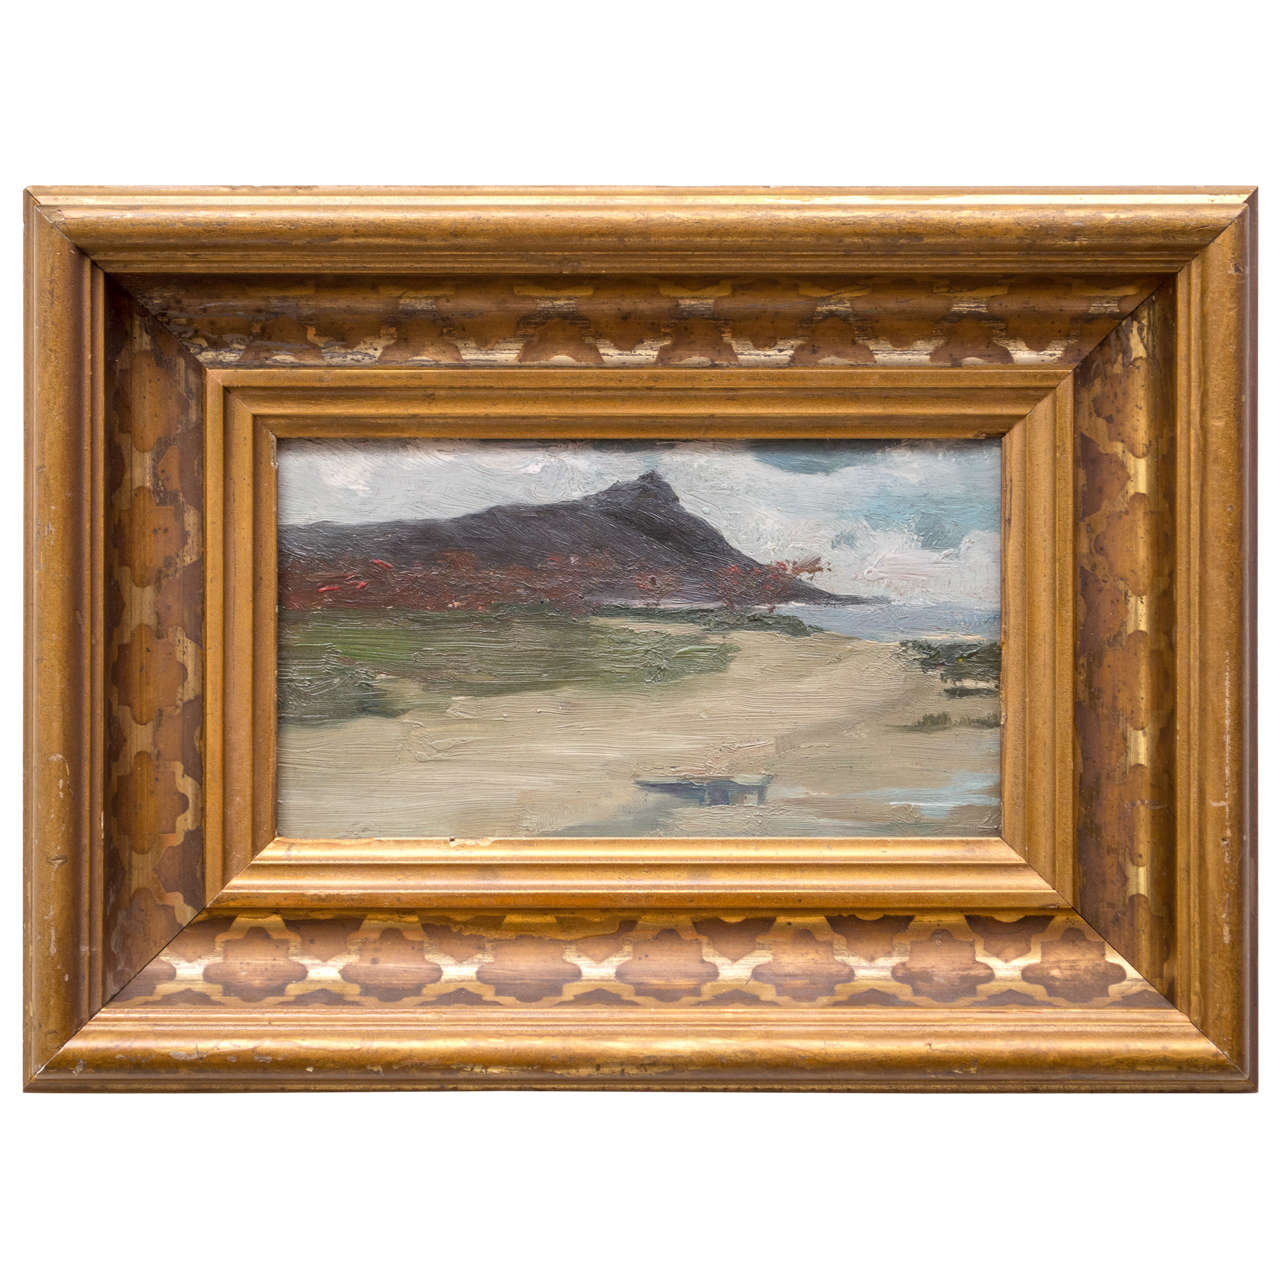 Late 19th Century Oil Painting of Hawaii, "View of Diamondhead"